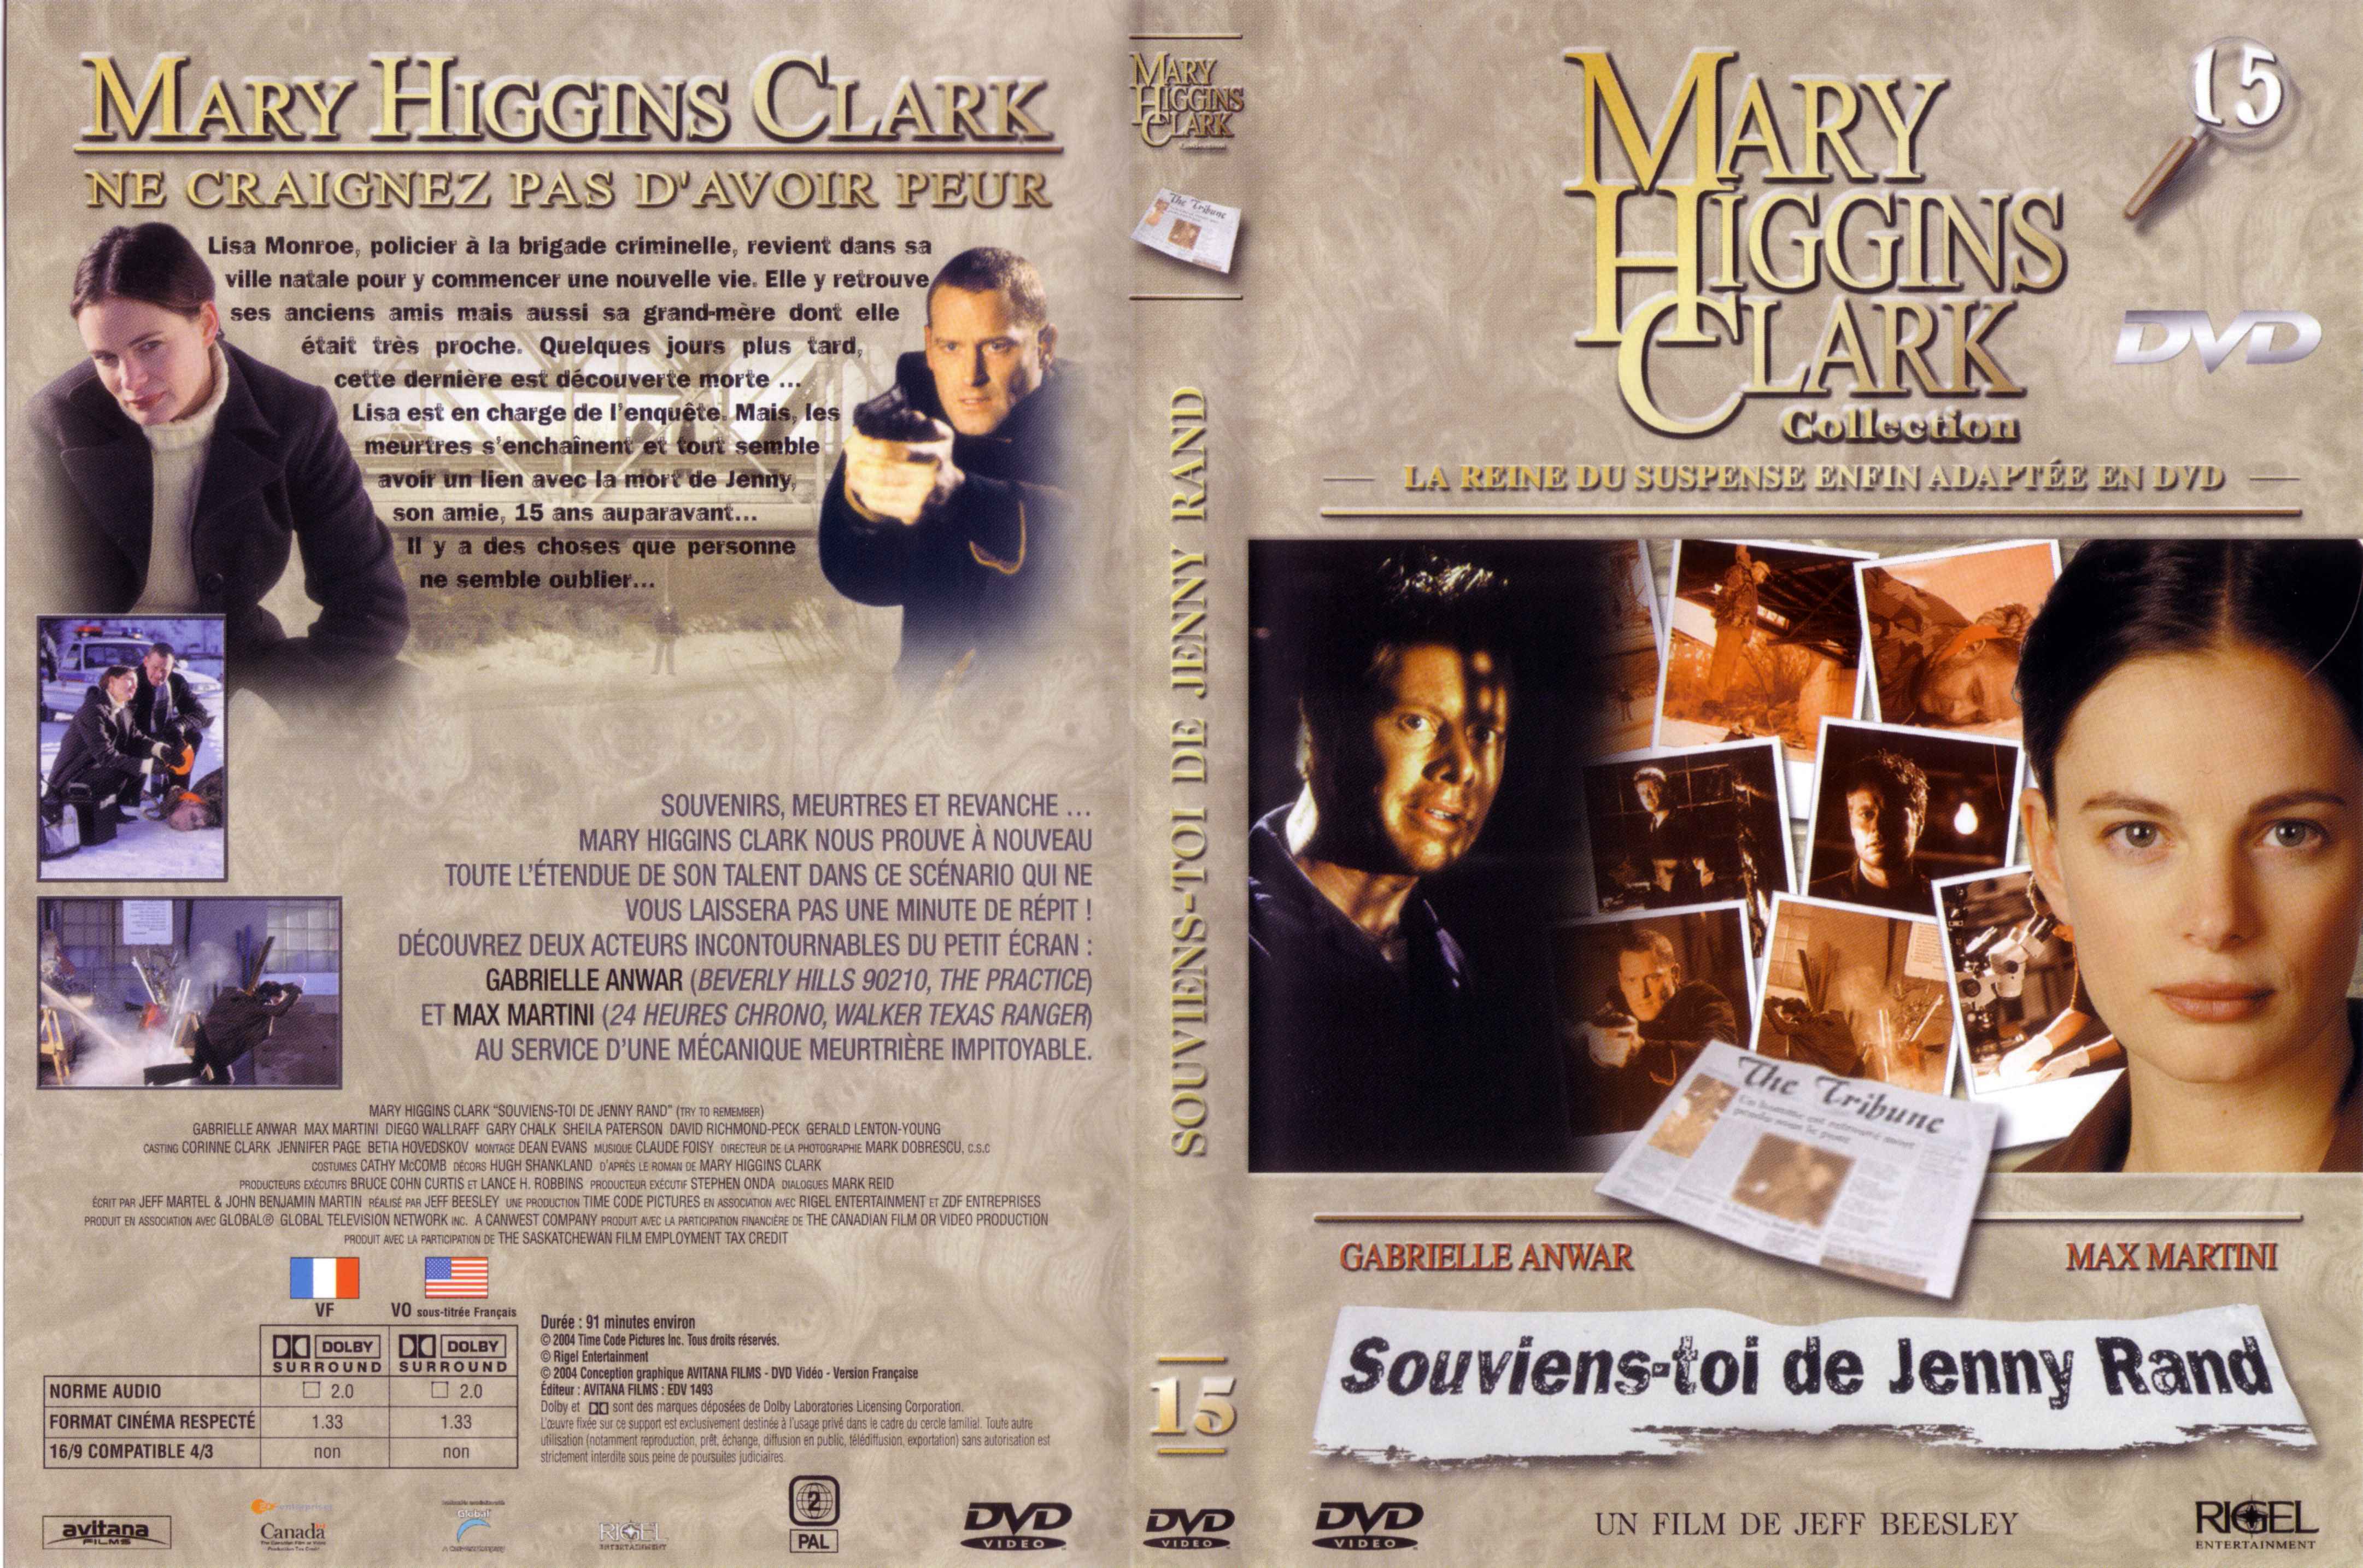 Jaquette DVD Mary Higgins Clark vol 15 - Souviens toi de Jenny Rand